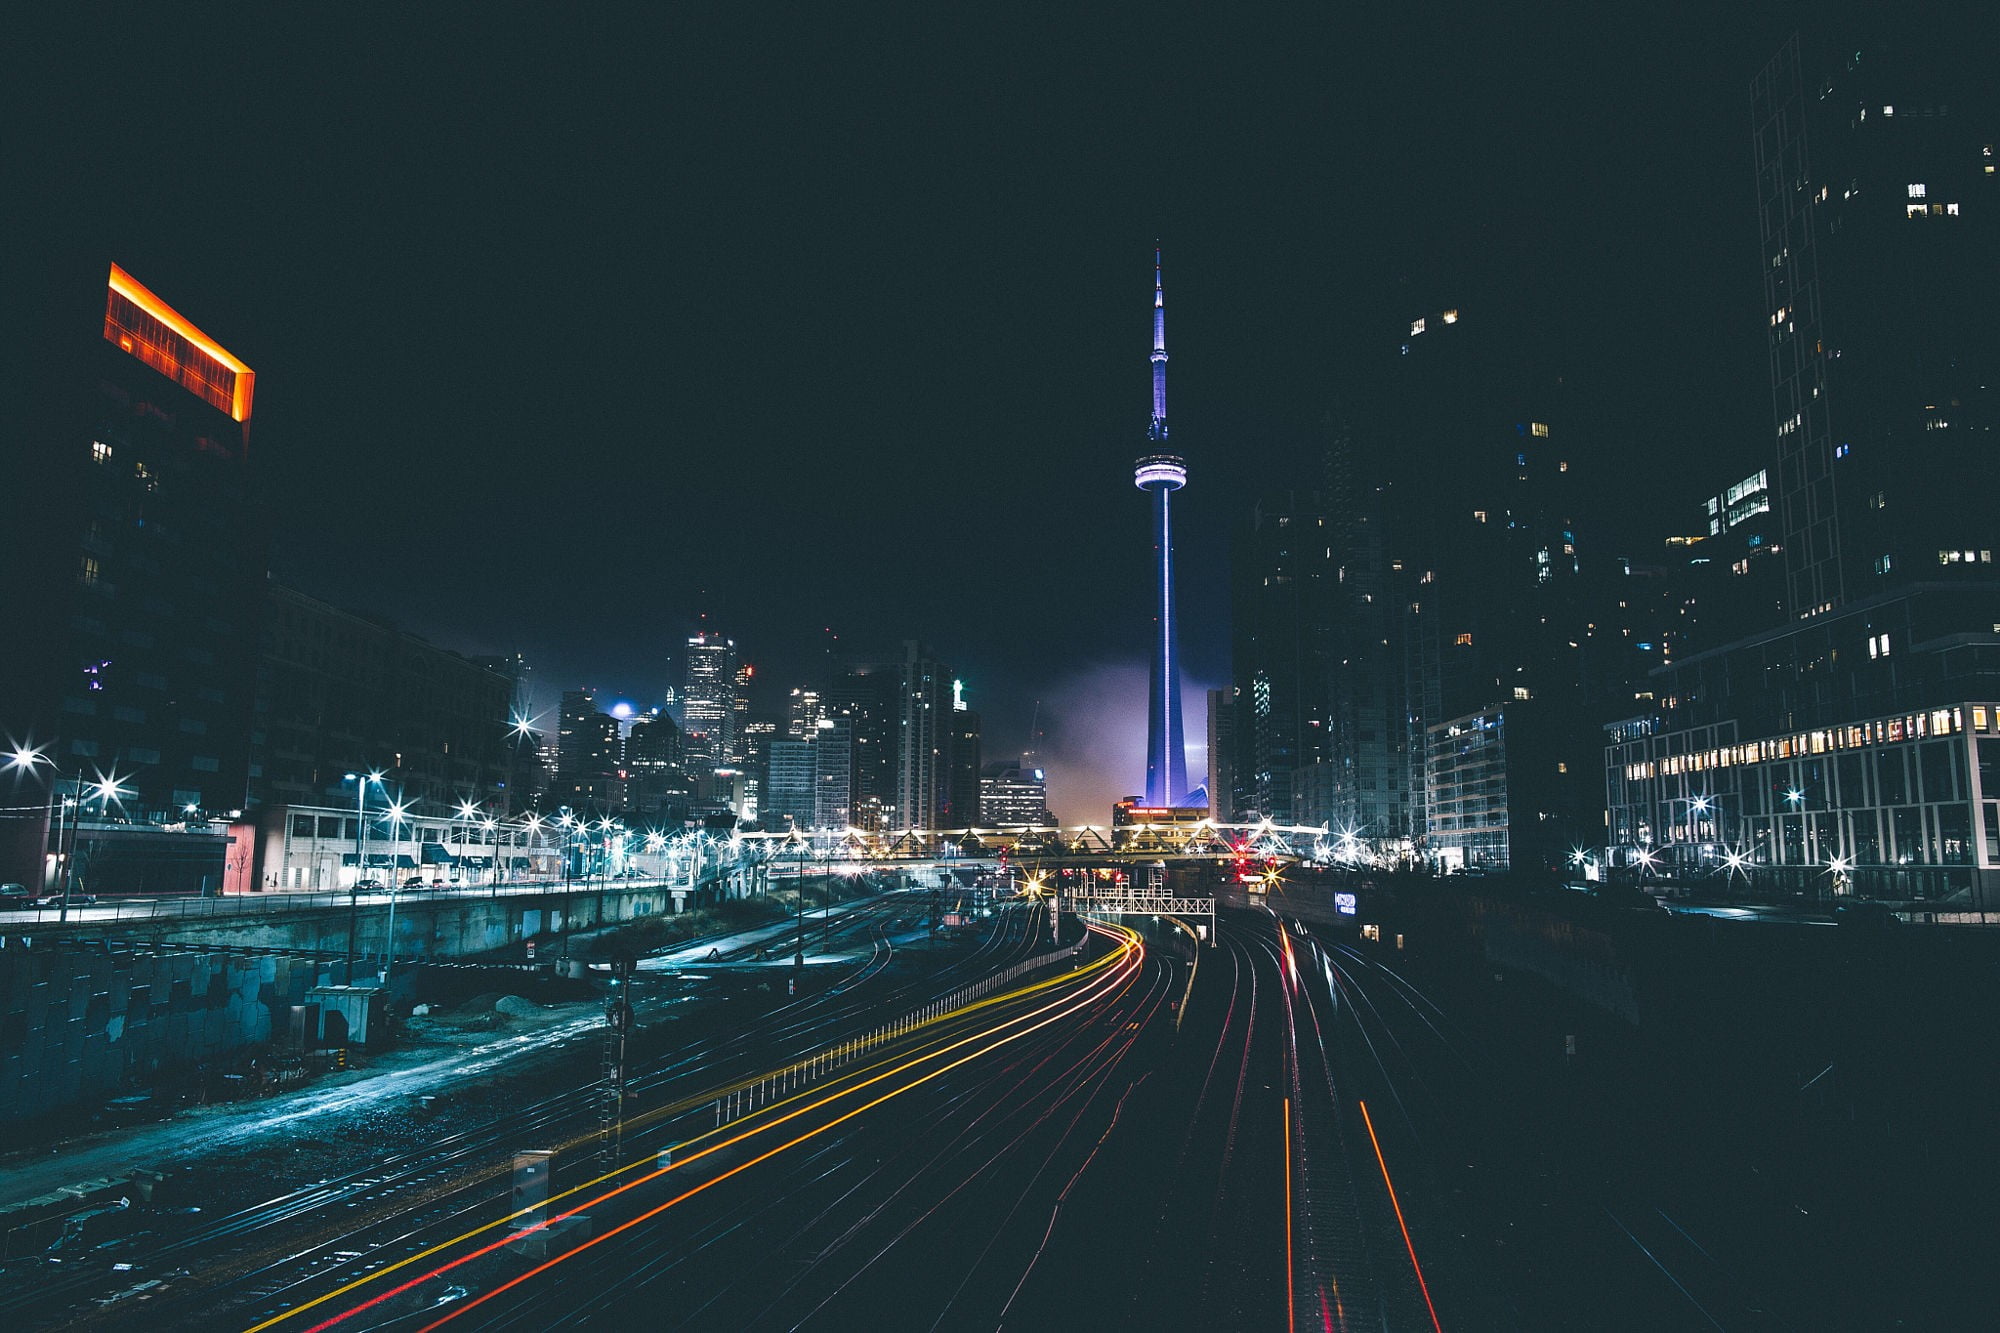 cityscape photo, city time lapse during night time, Toronto, railway